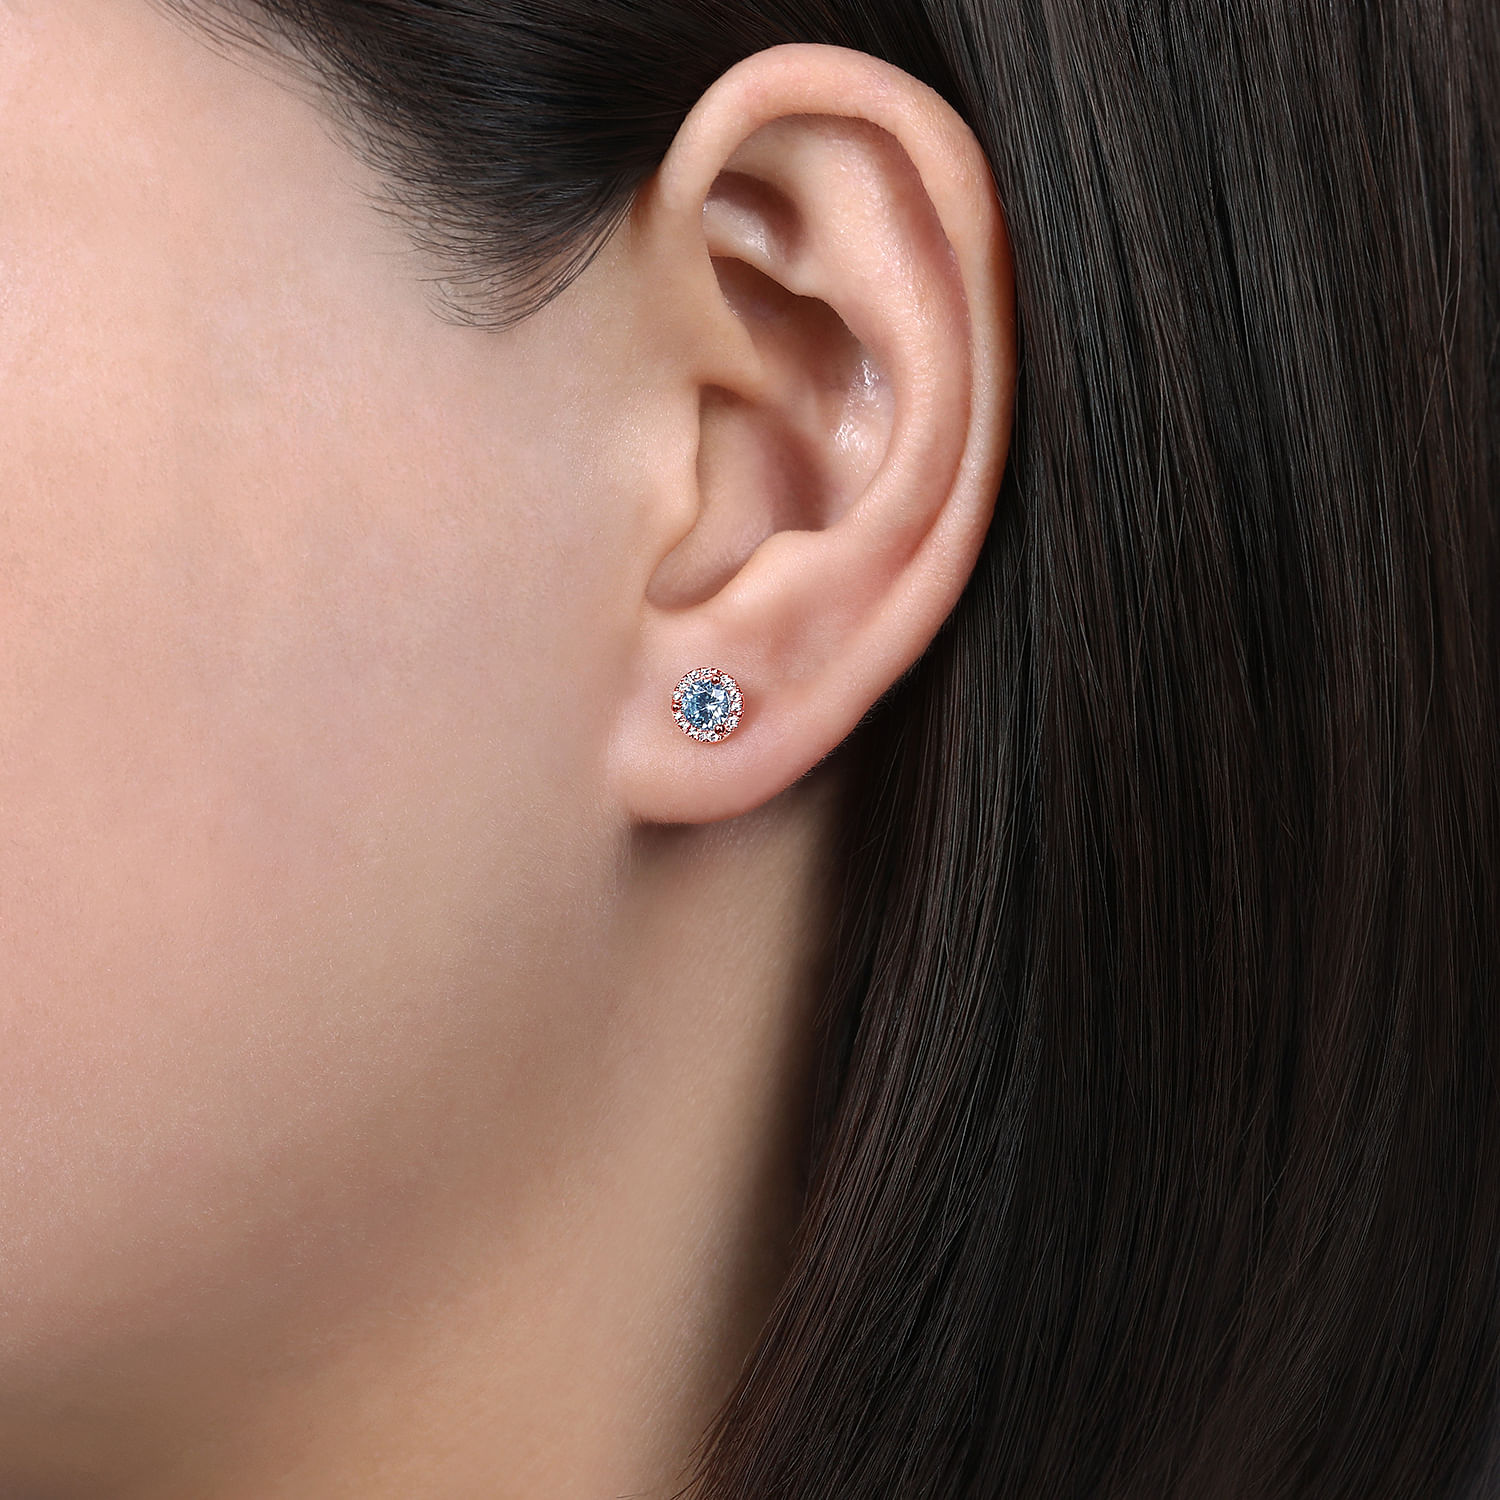 14K Rose Gold Diamond Halo Stud Earrings